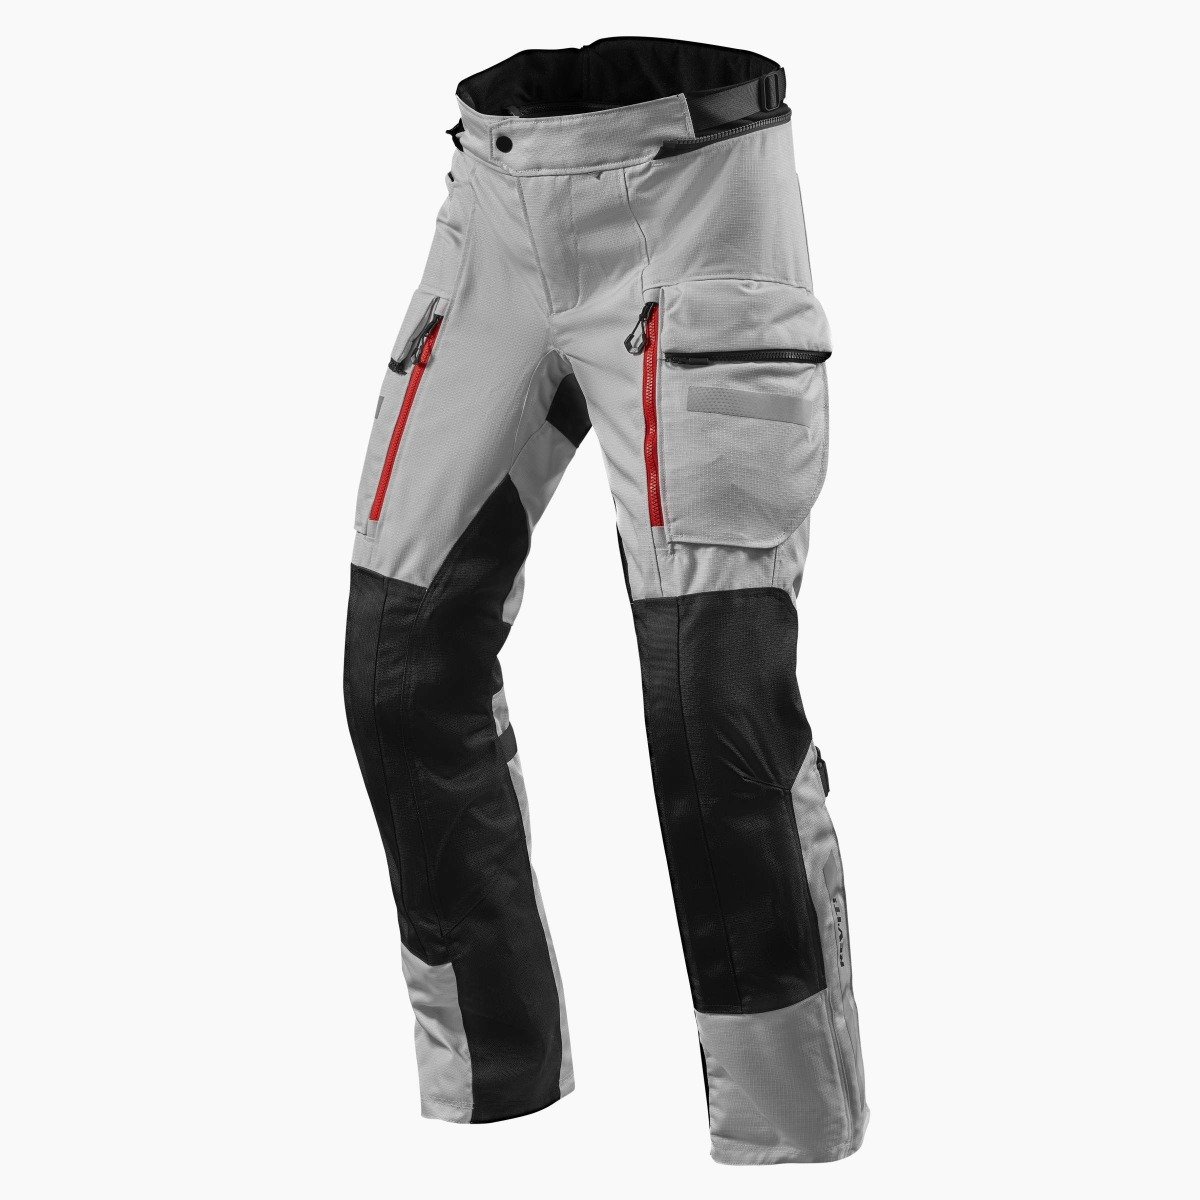 Image of REV'IT! Sand 4 H2O Short Silver Black Motorcycle Pants Size 3XL EN